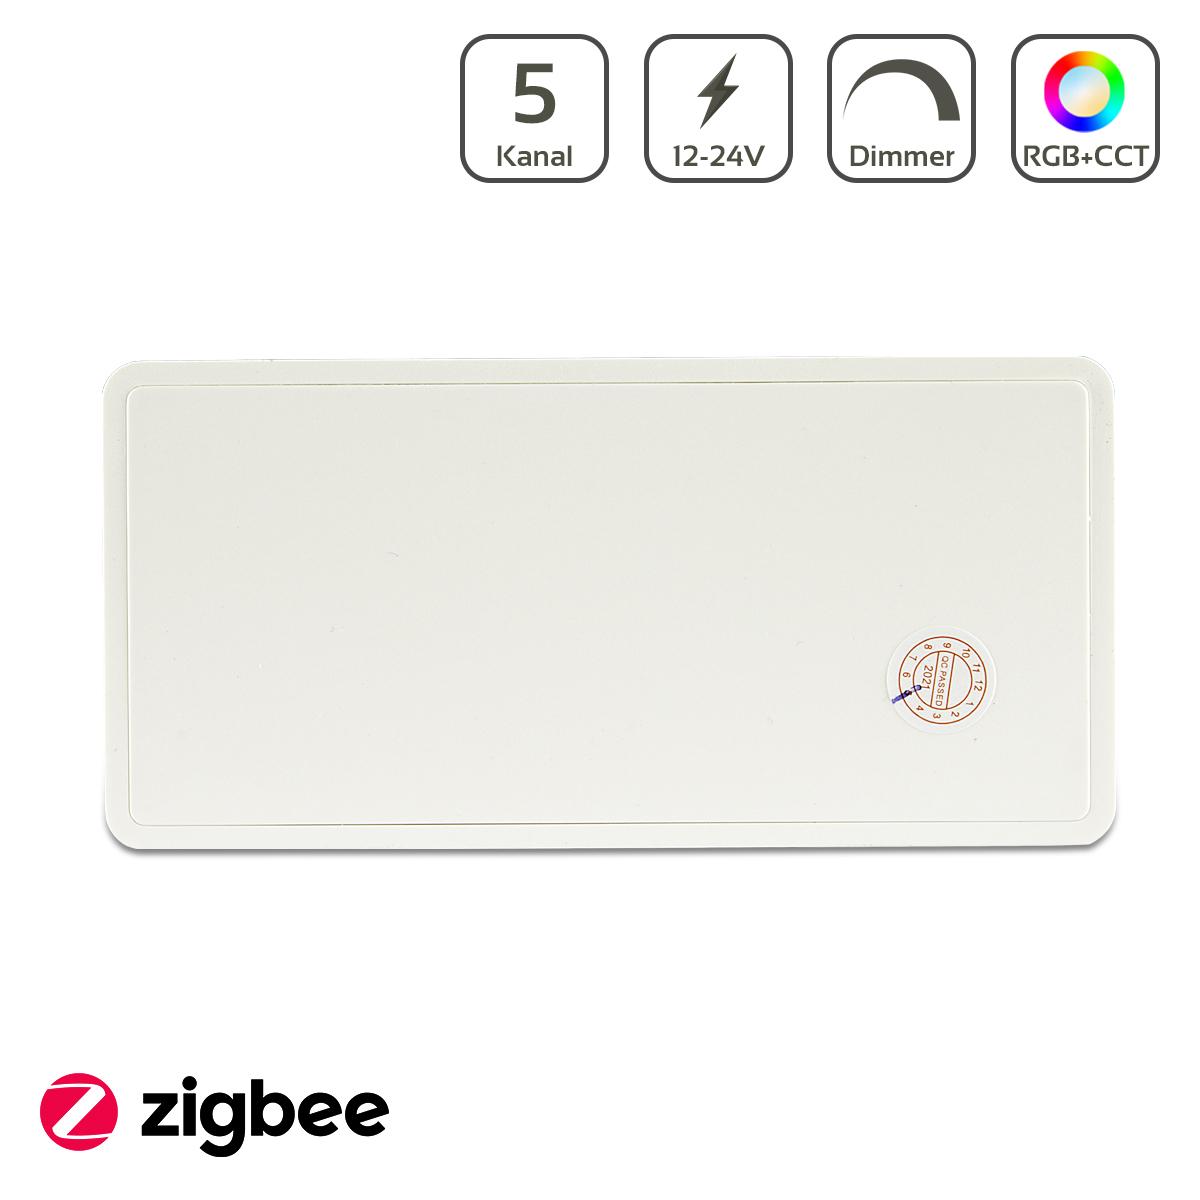 MiBoxer Zigbee 3.0 RGB+CCT LED Controller 5 Kanal 12/24V Multifunktion LED Strip Panel Steuerung FUT039Z